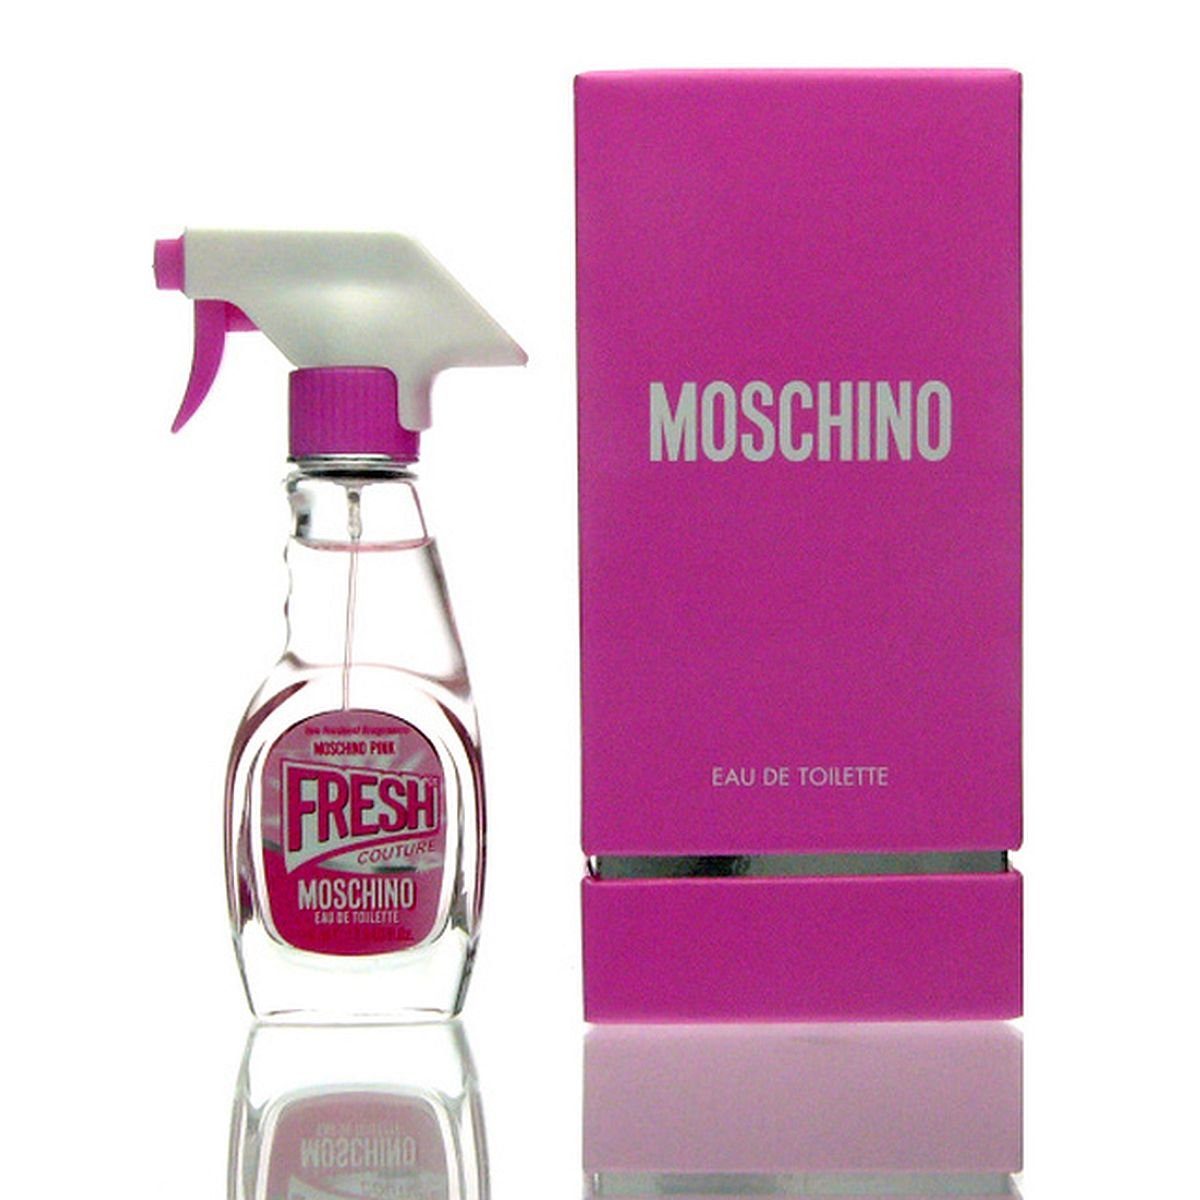 Couture Eau Pink Fresh de Moschino Toilette ml 100 Moschino Toilette Eau de